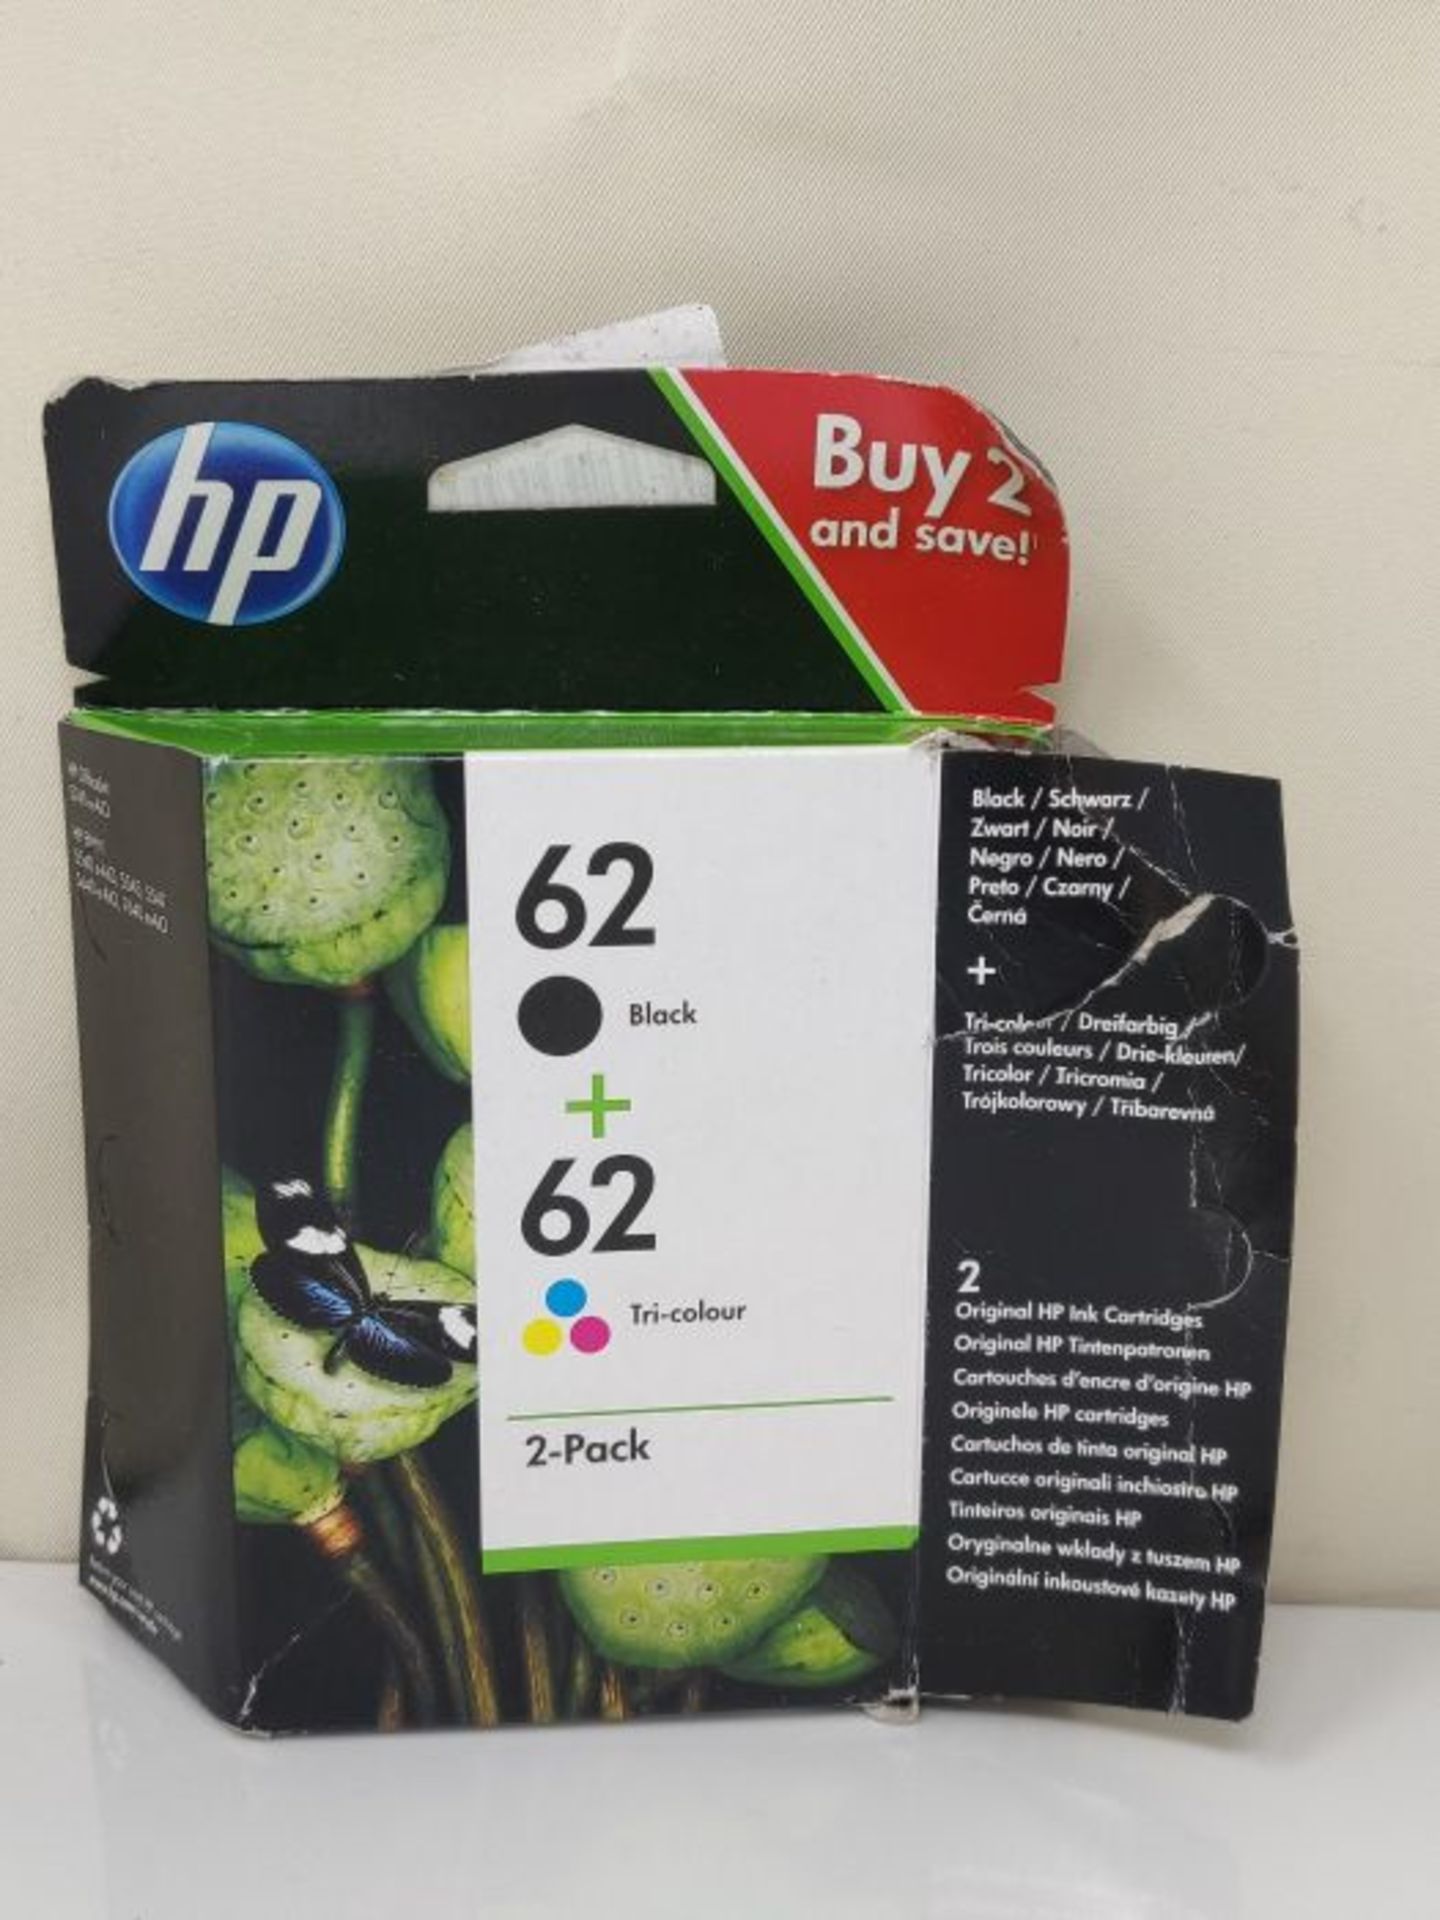 HP N9J71AE 62 Original Ink Cartridges, Black and Tri-color, Multipack - Image 2 of 3